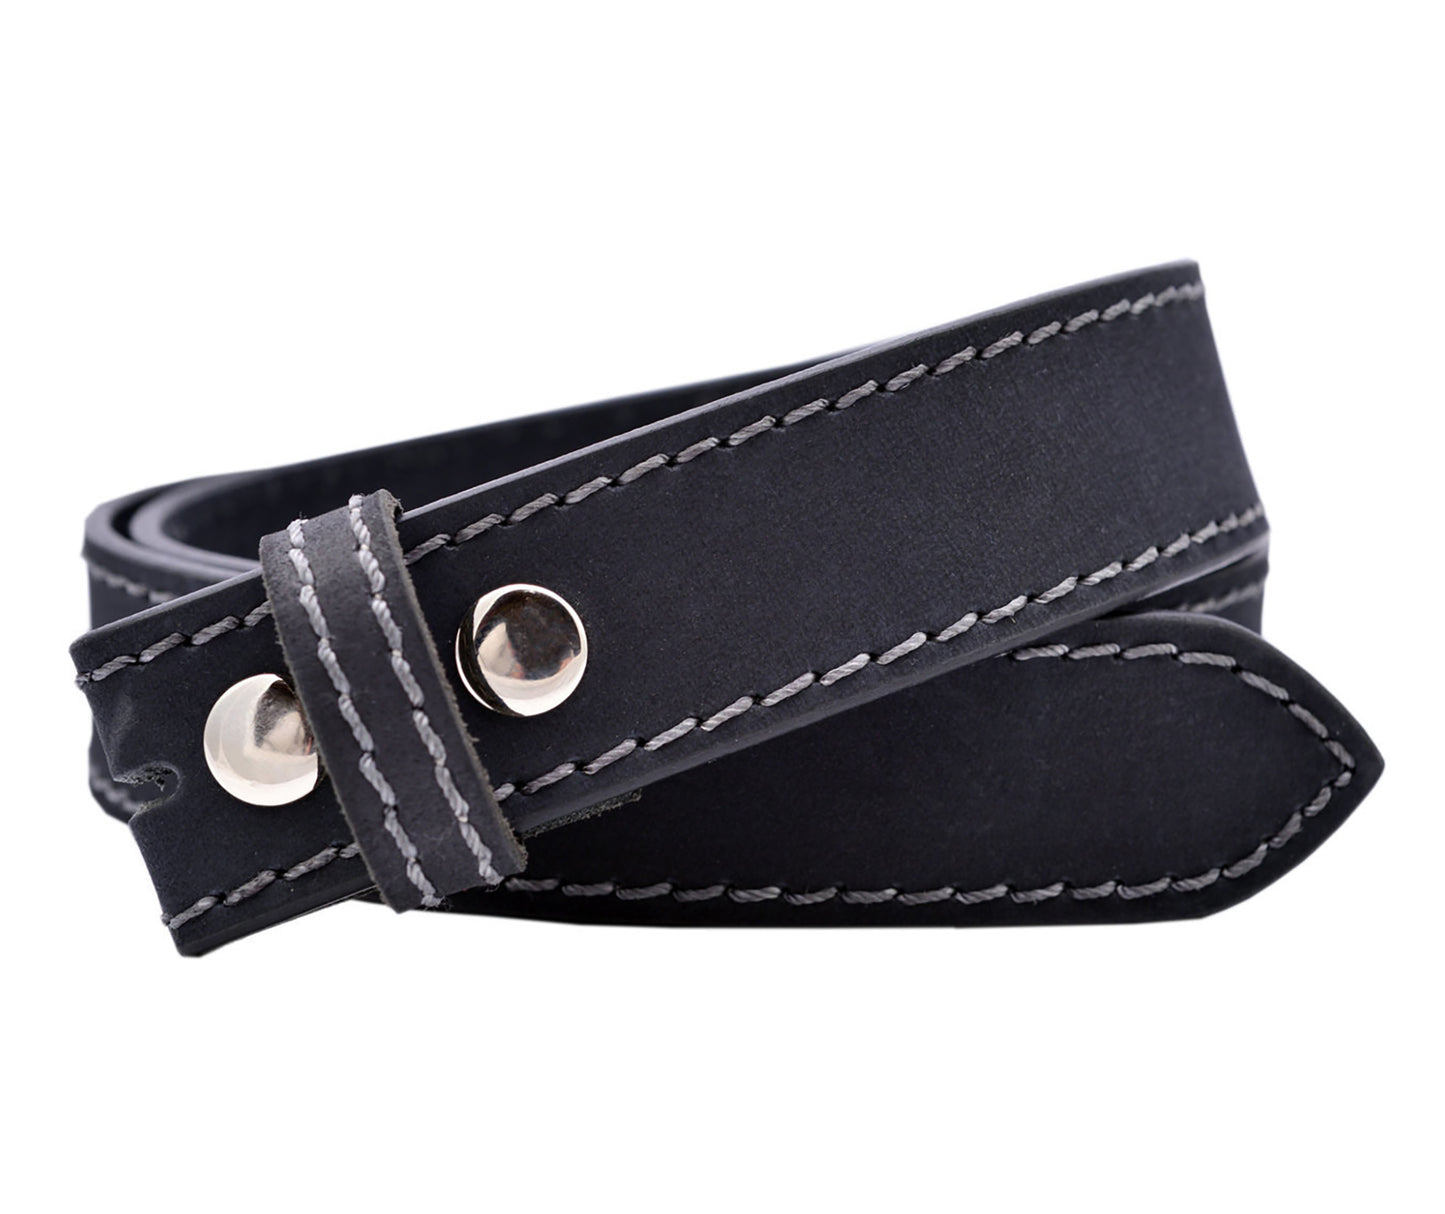 Full Grain Buffalo Leather Belt w/ Gray Stitching - Black - TBS4301